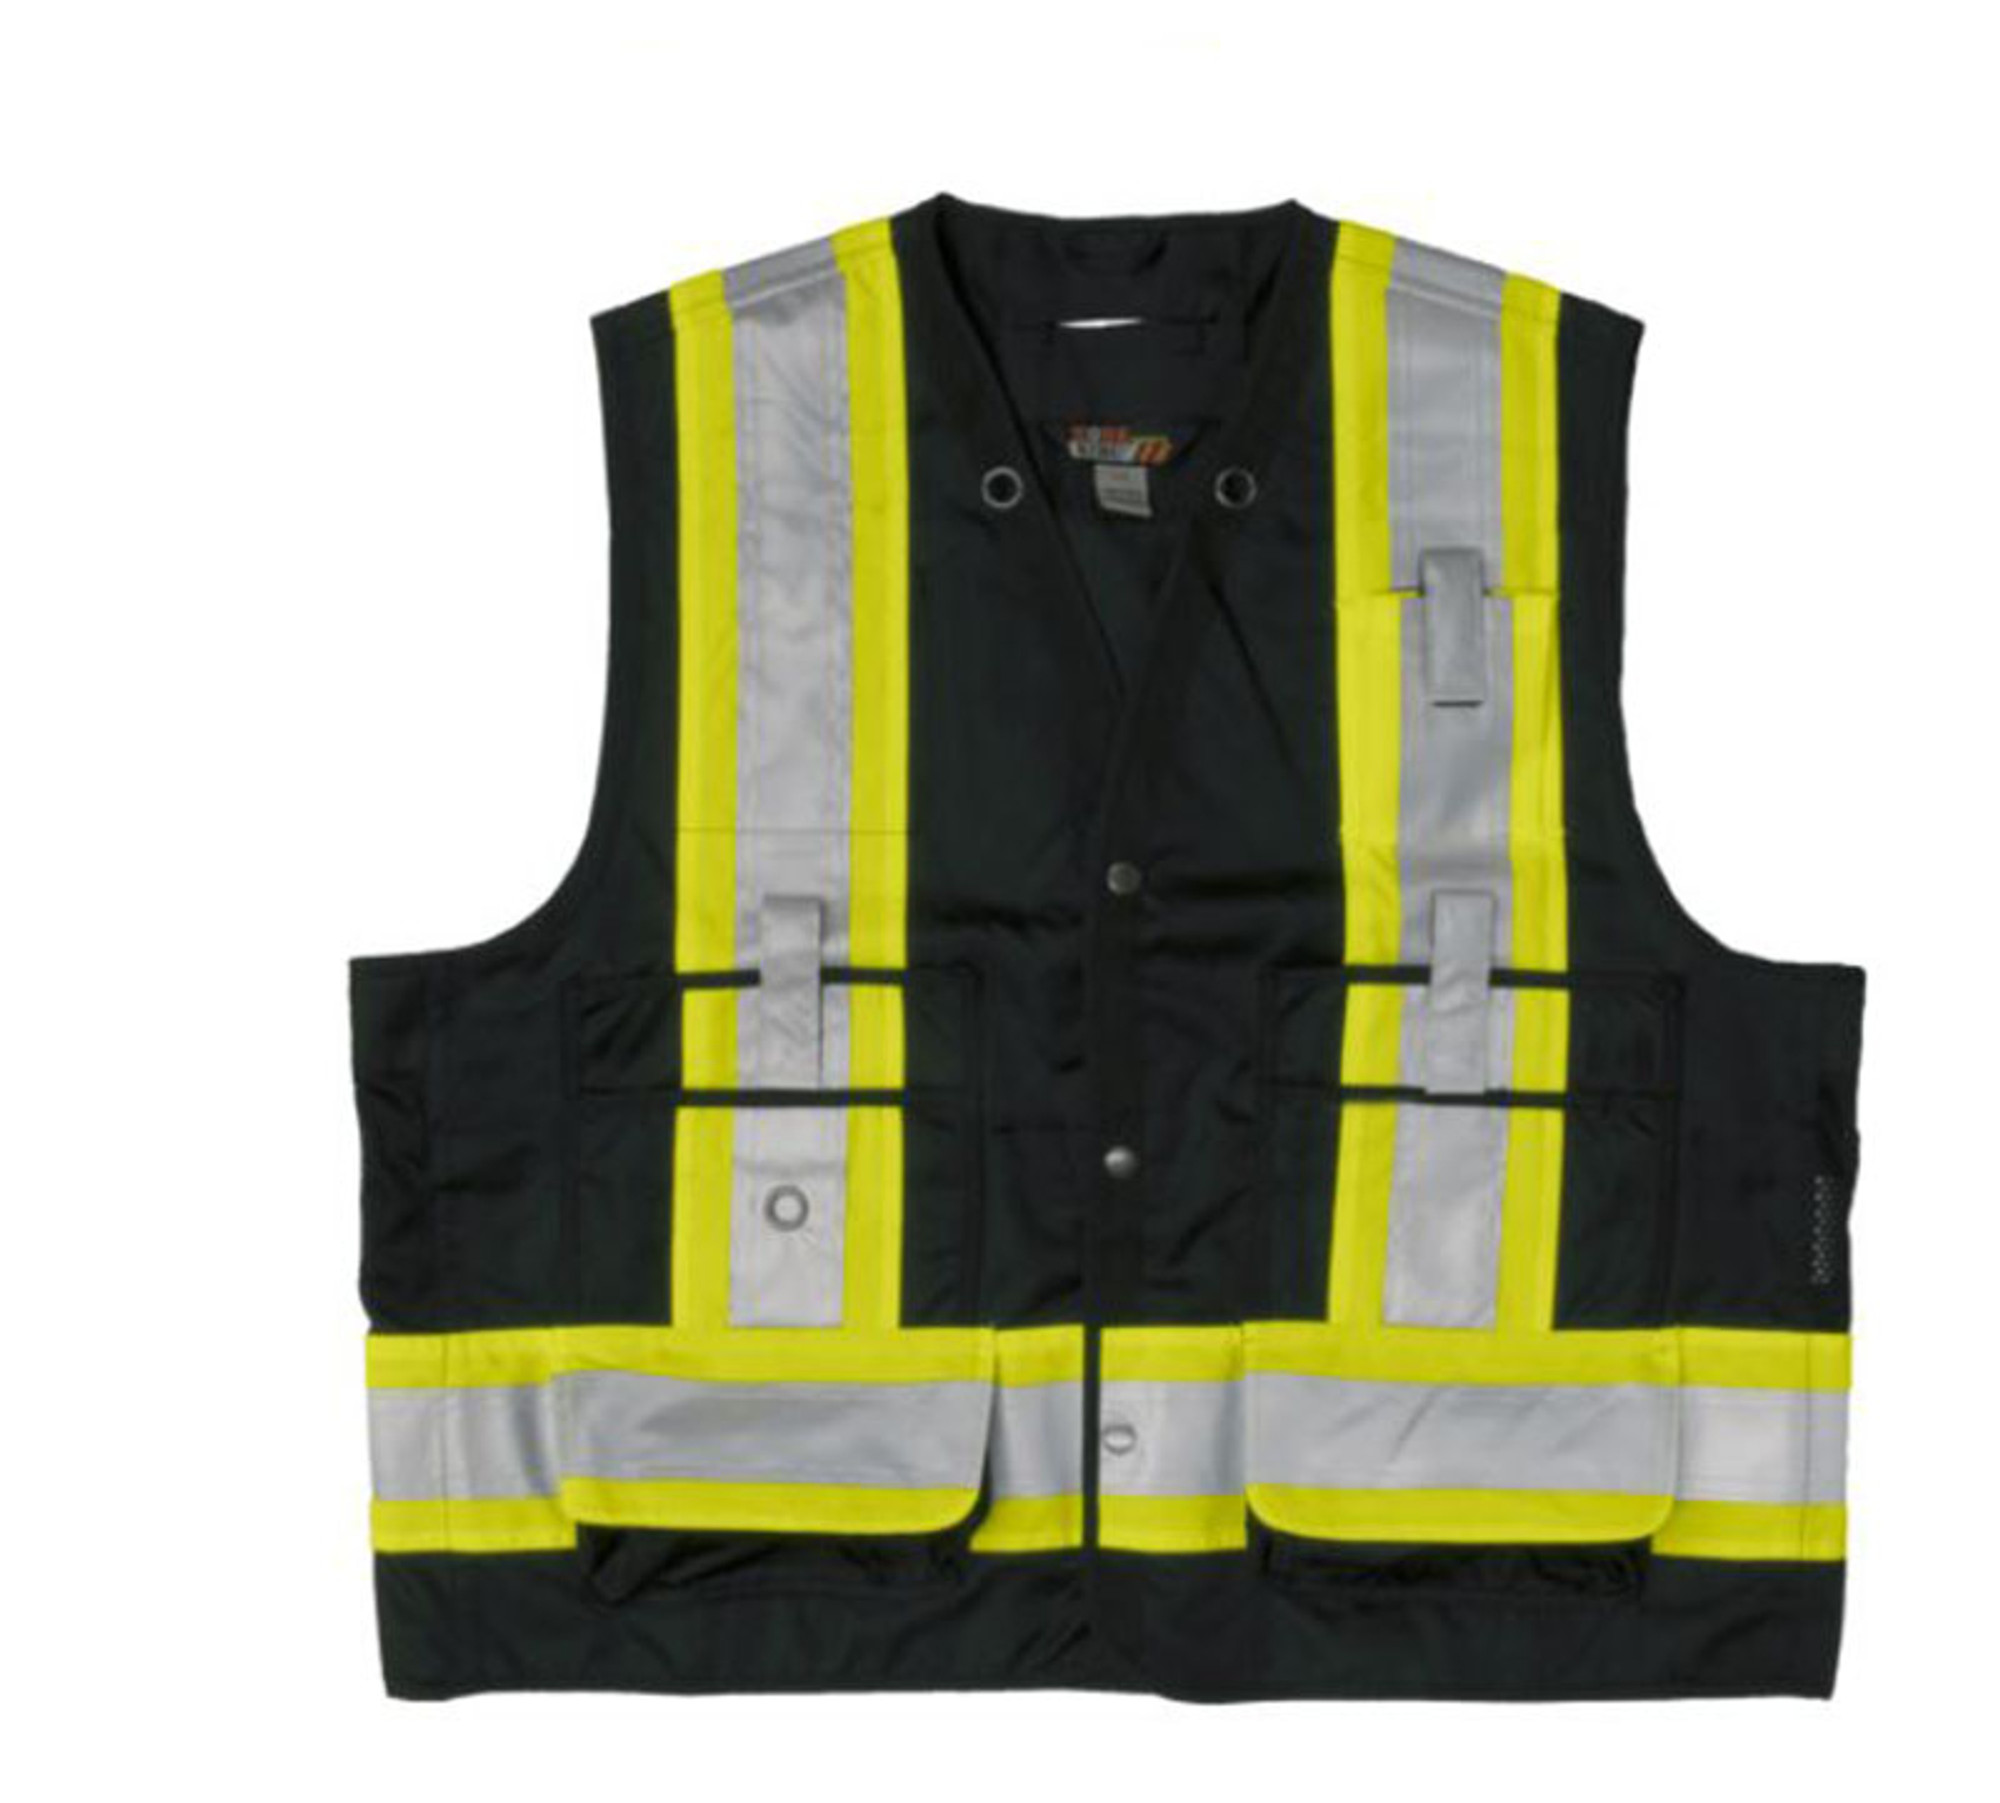 Surveyor Safety Vest (Black) - 2 Pack